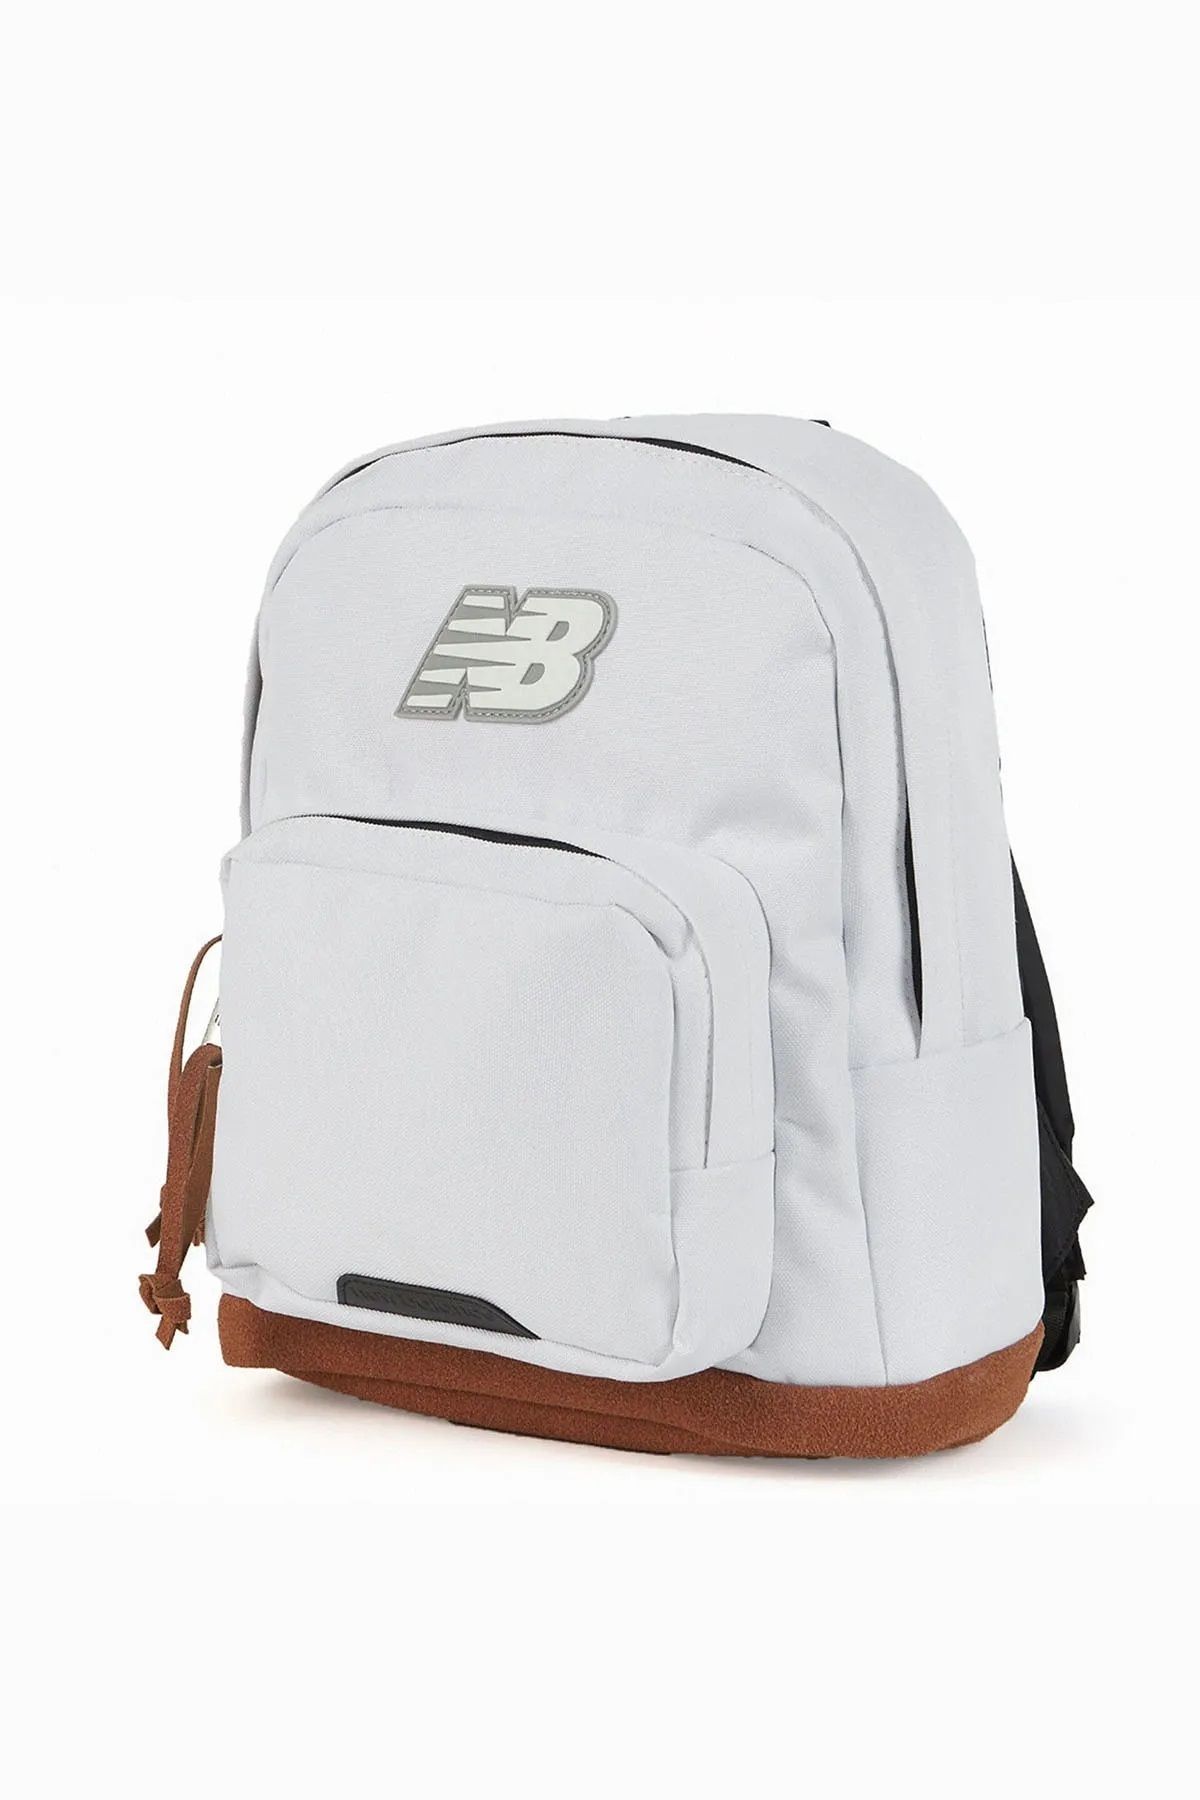 New Balance Çanta Nb Mini Backpack Anb3201-wt  MİNİ BOY COCUK